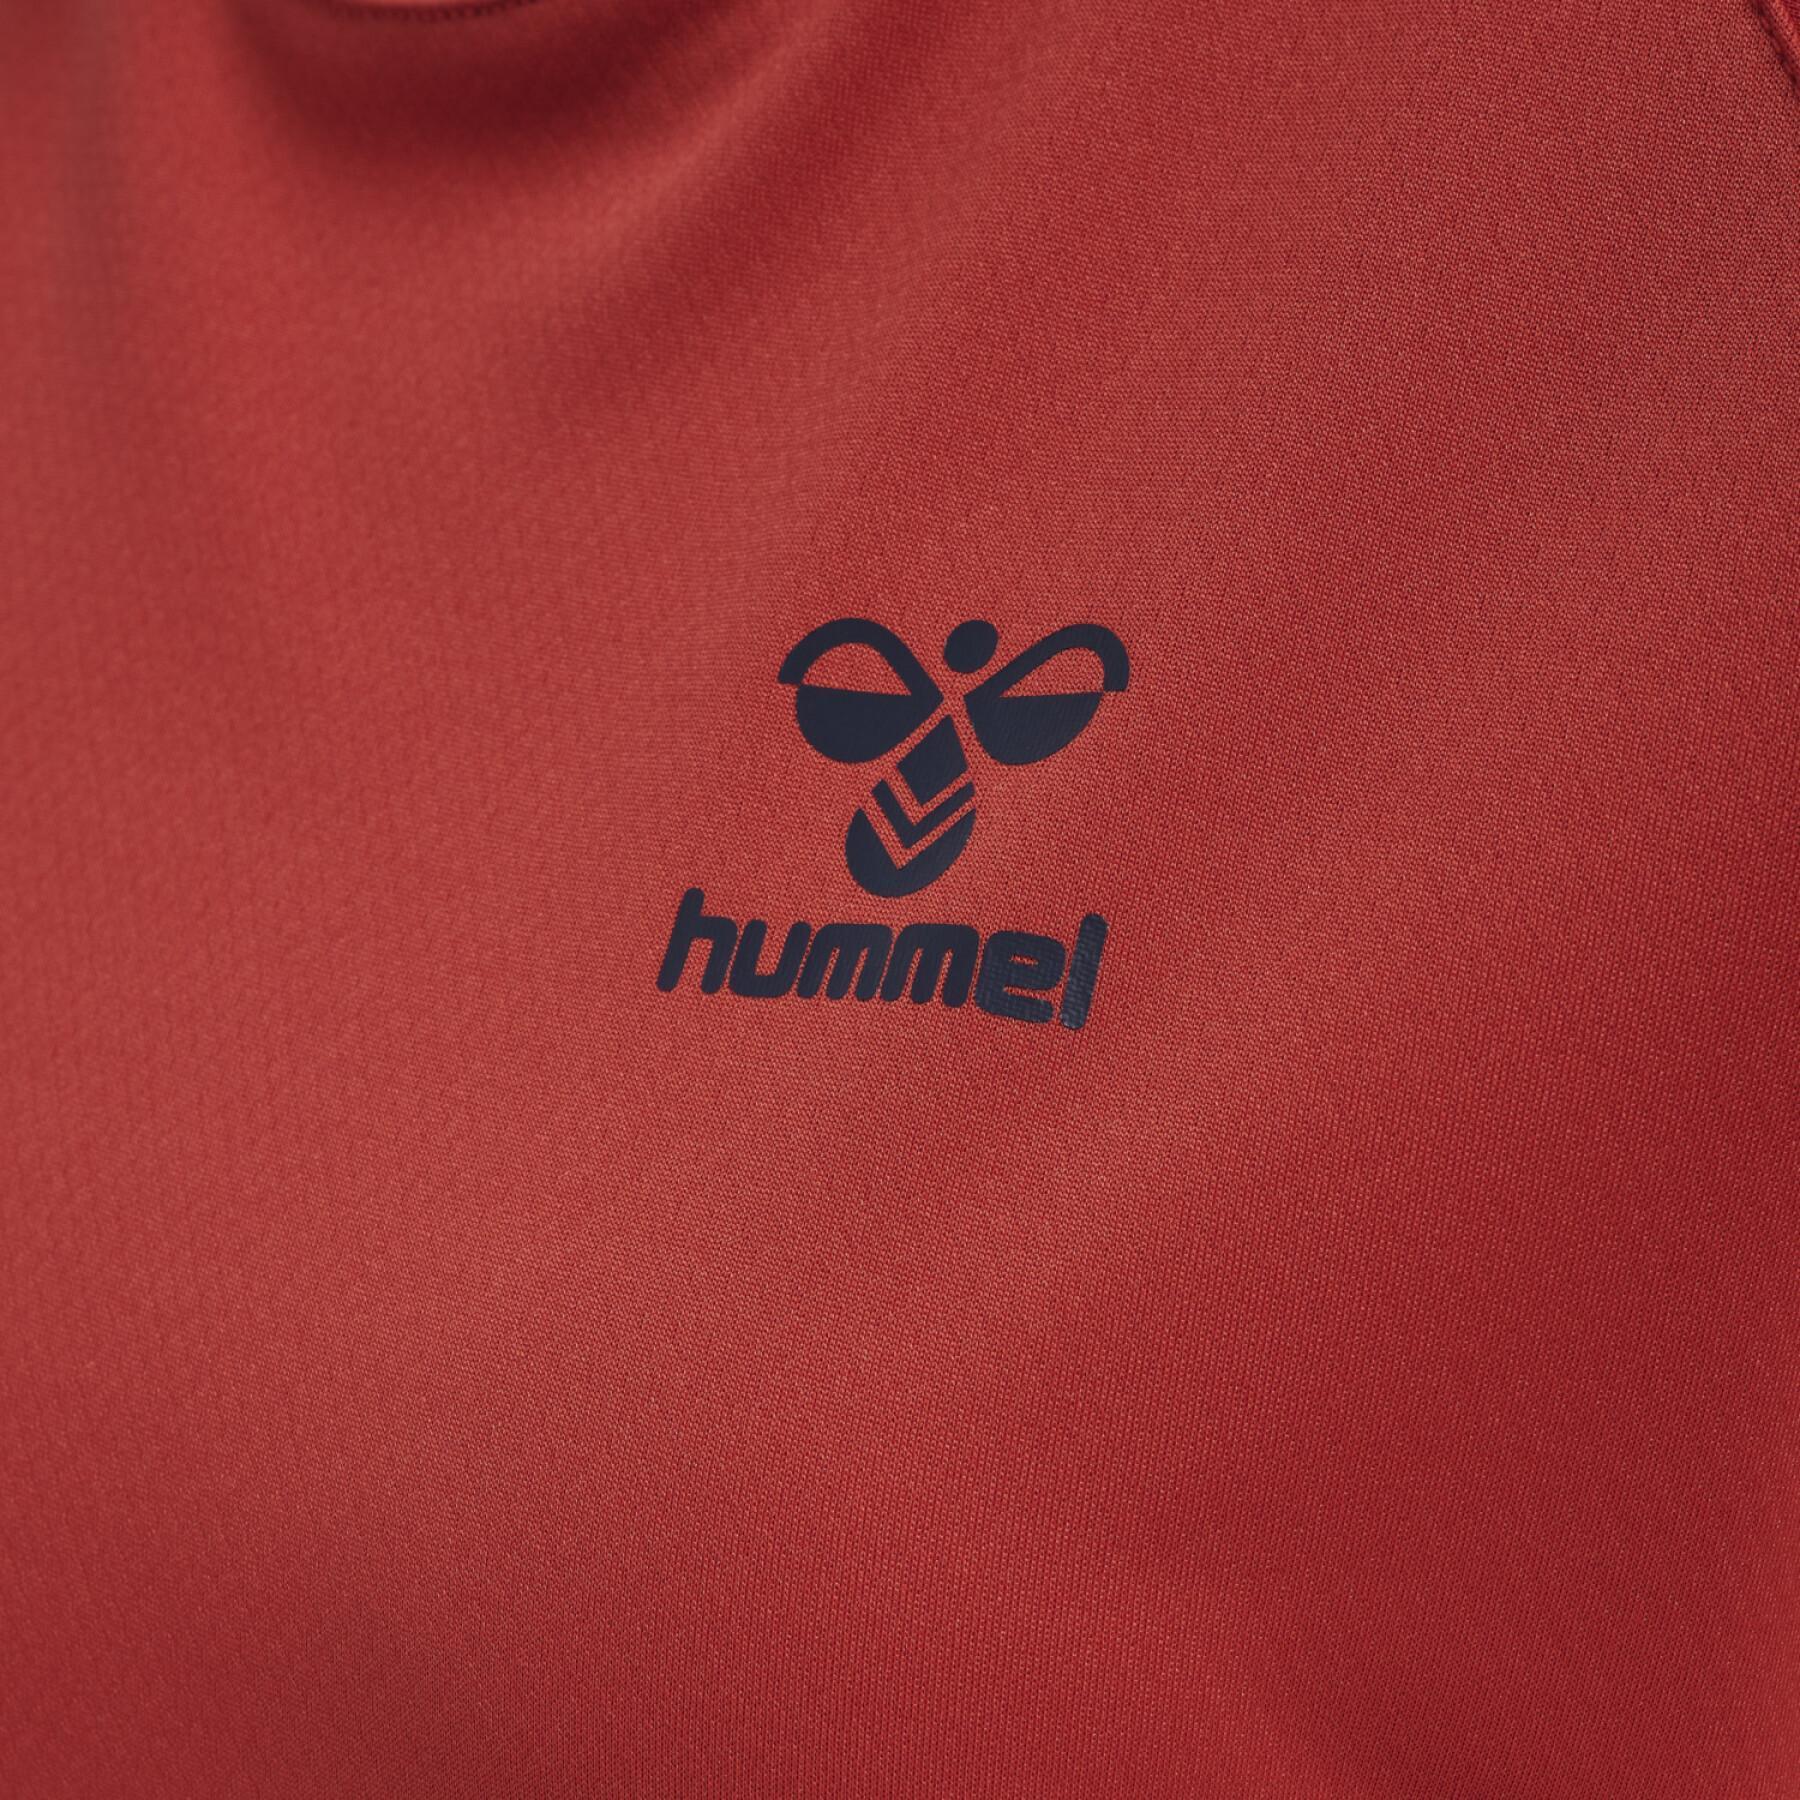 Women's jersey Hummel action S/S